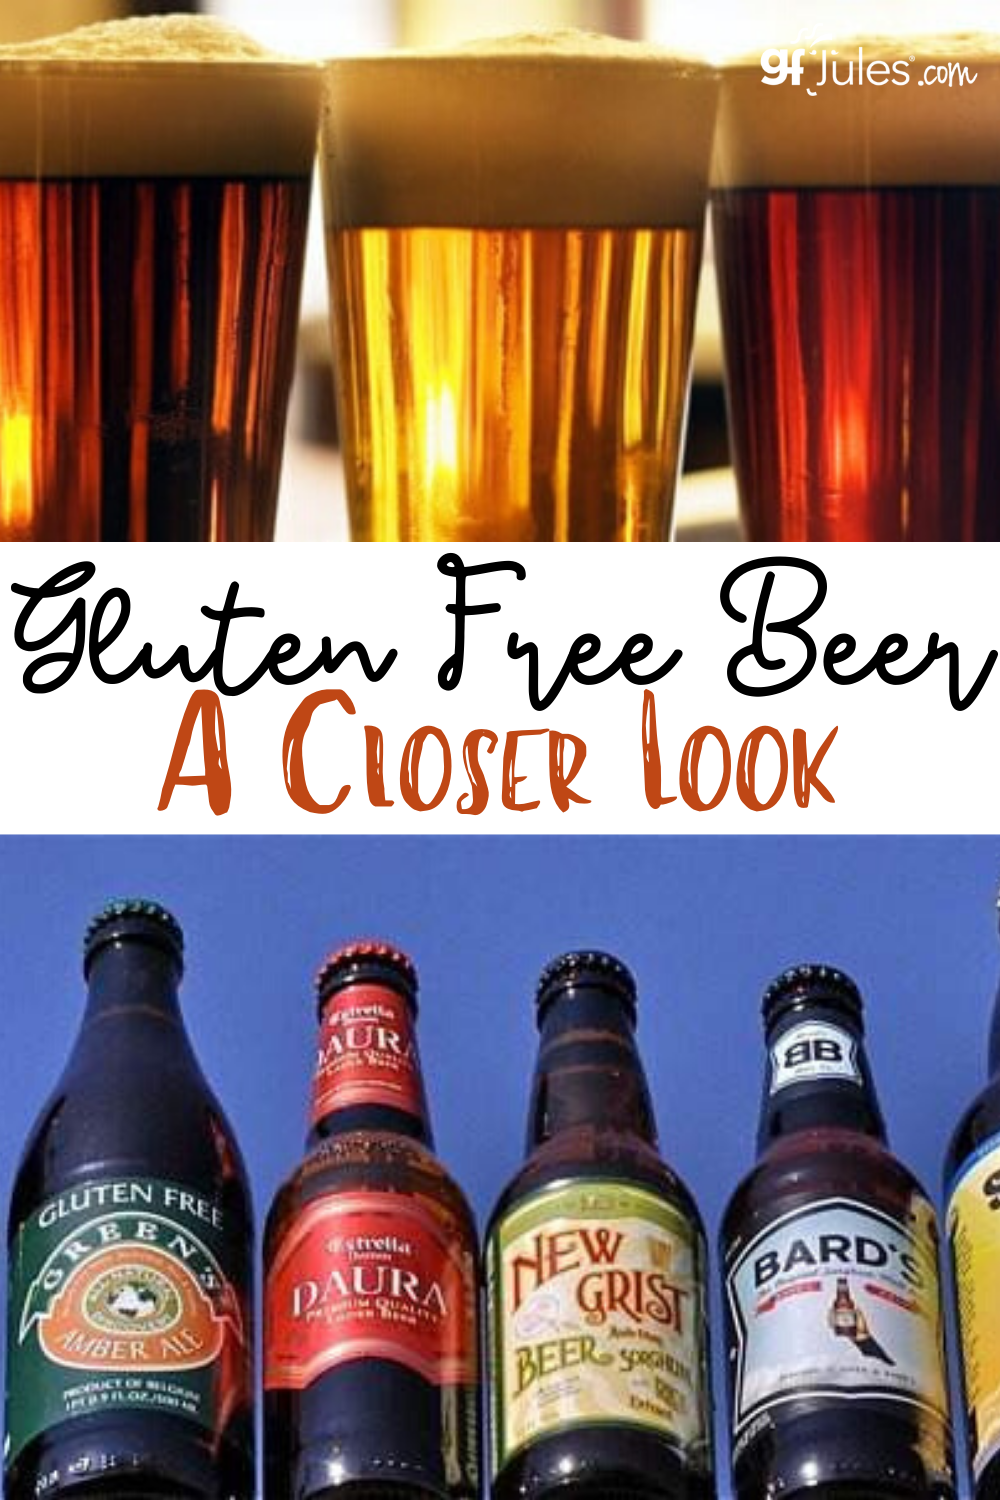 How To Keep Your Beer Bottles Cold - Best Gluten Free Beers